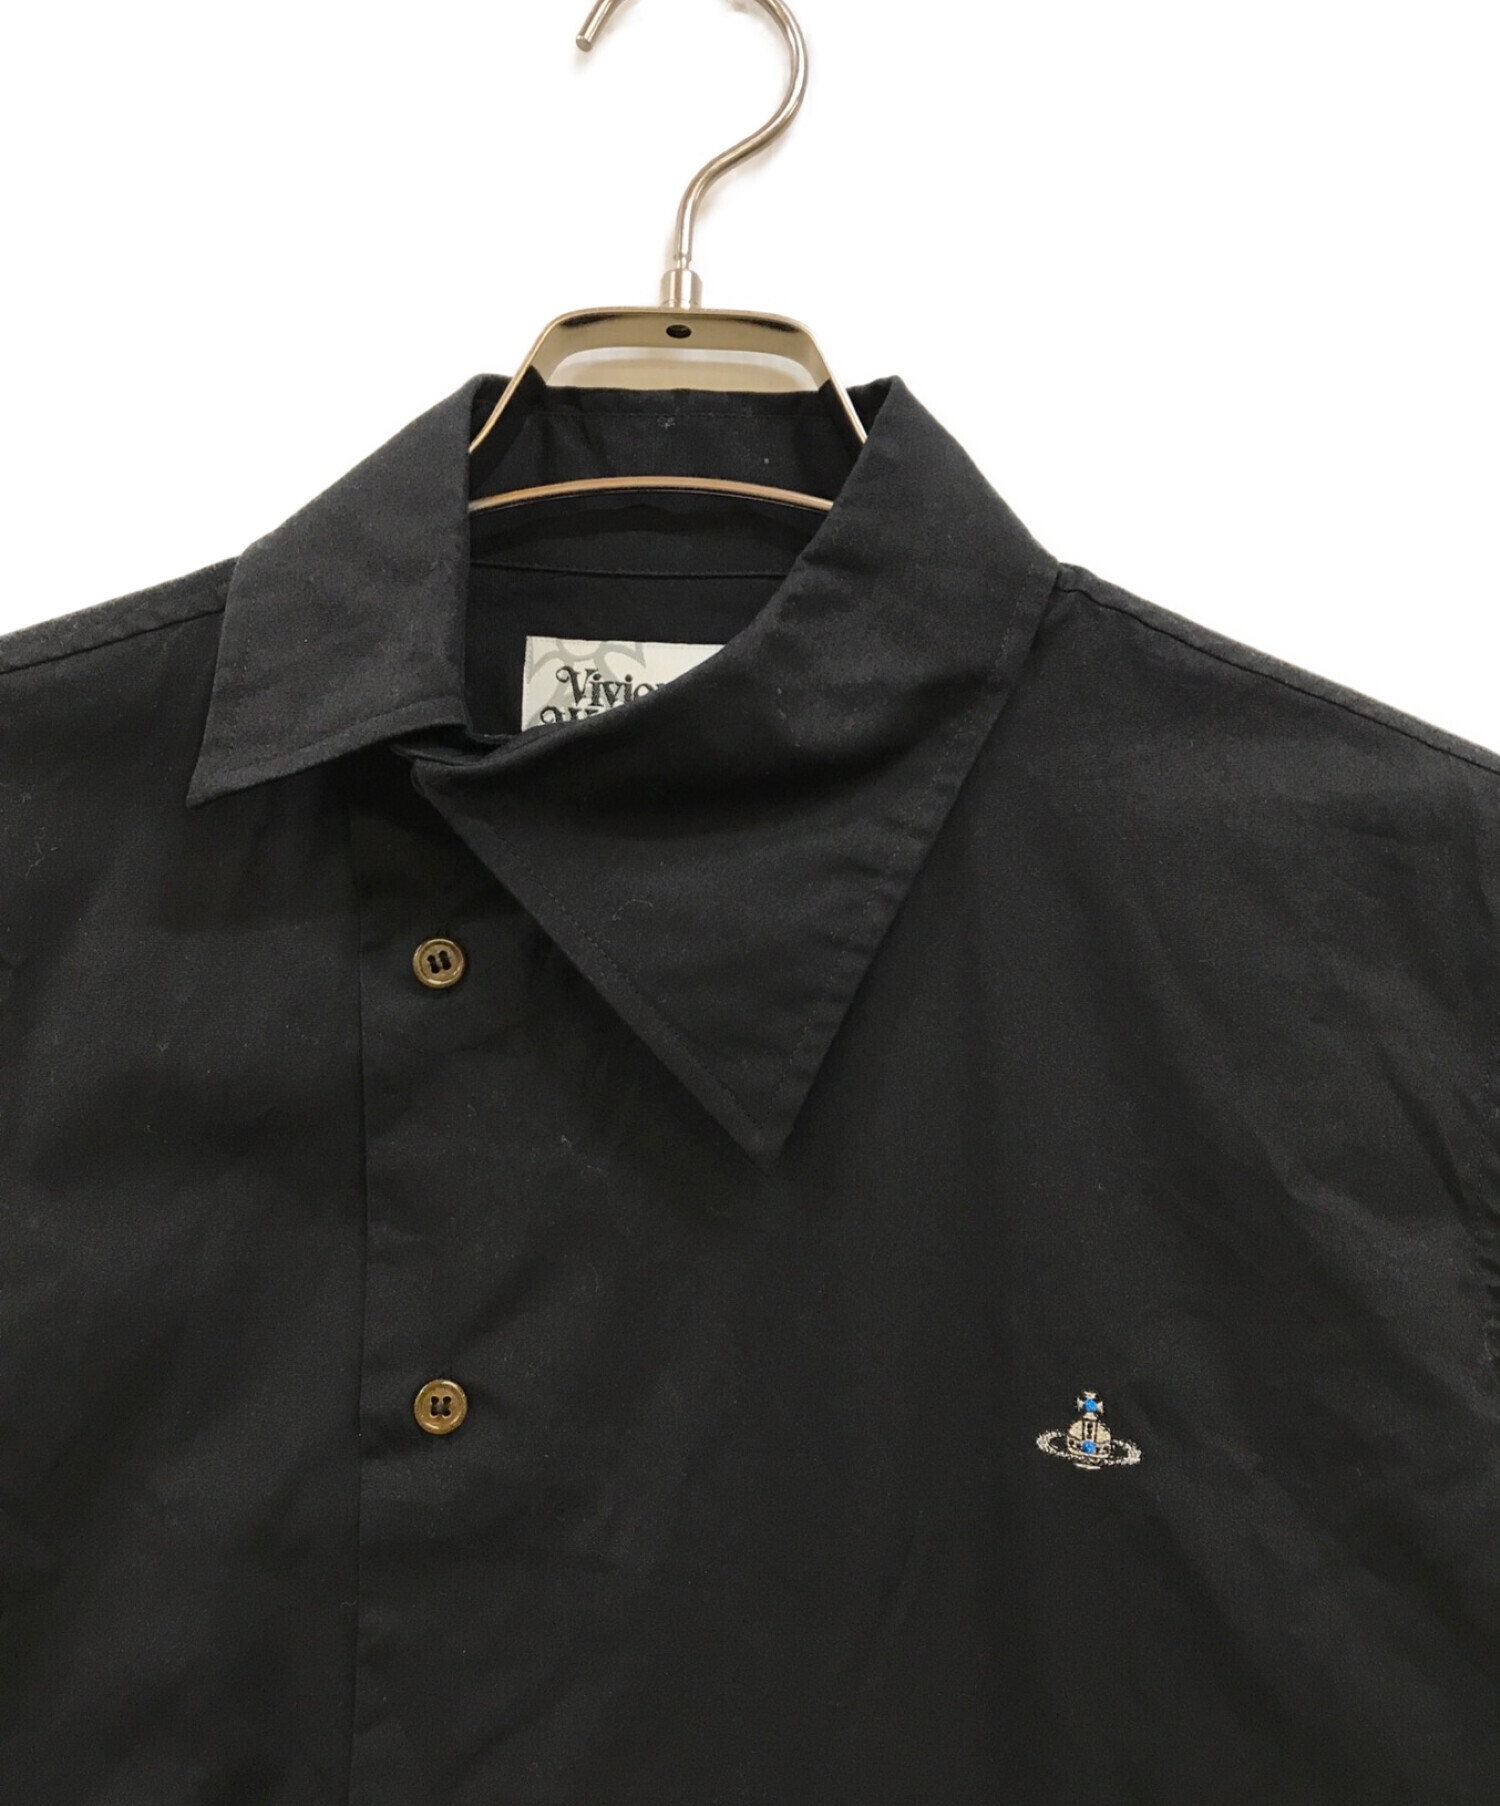 Vivienne Westwood man (ヴィヴィアン ウェストウッド マン) アシンメトリーシャツ ブラック サイズ:44